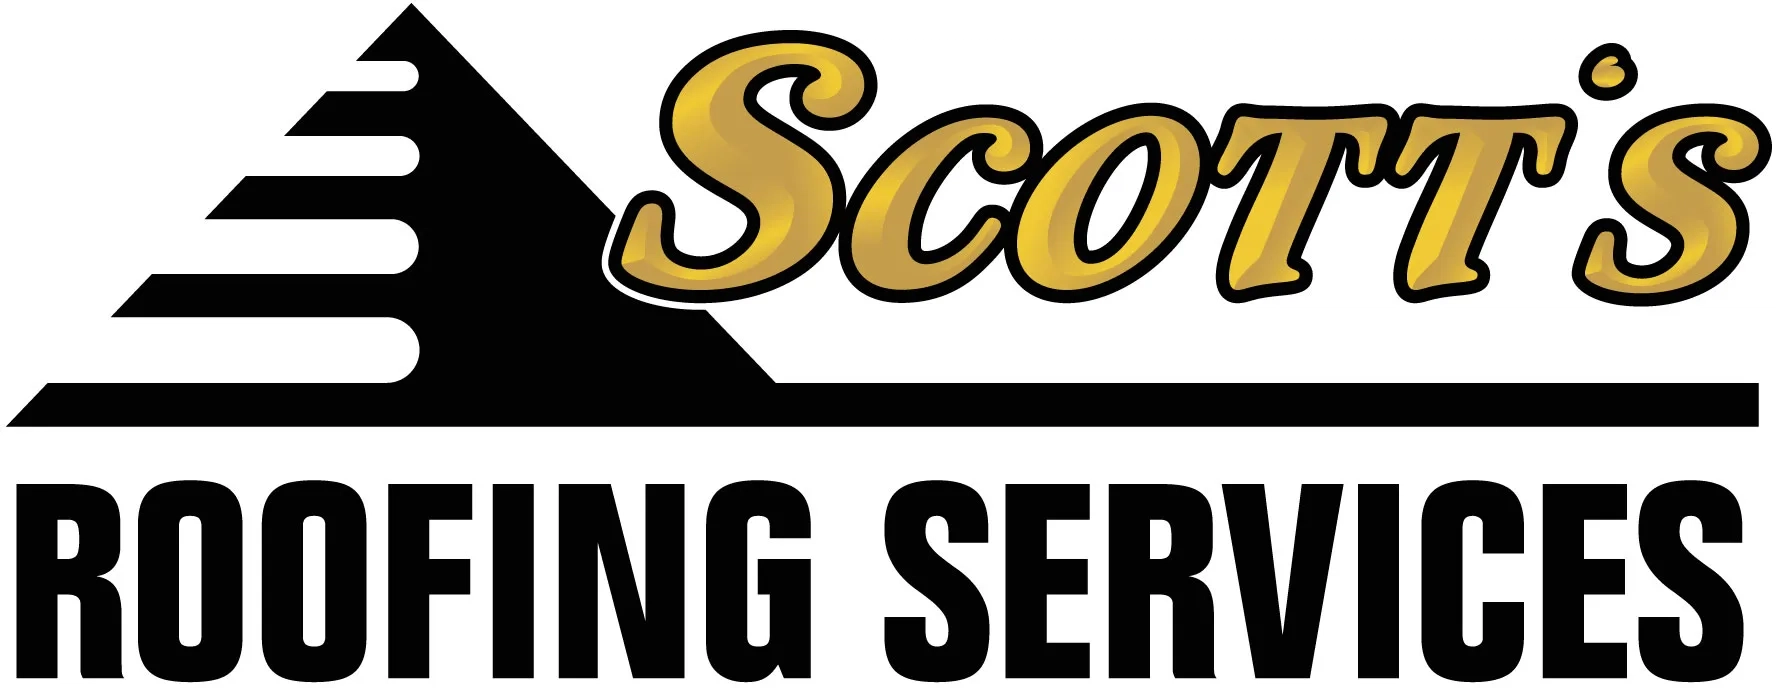 Scott's Roofing Services Logo